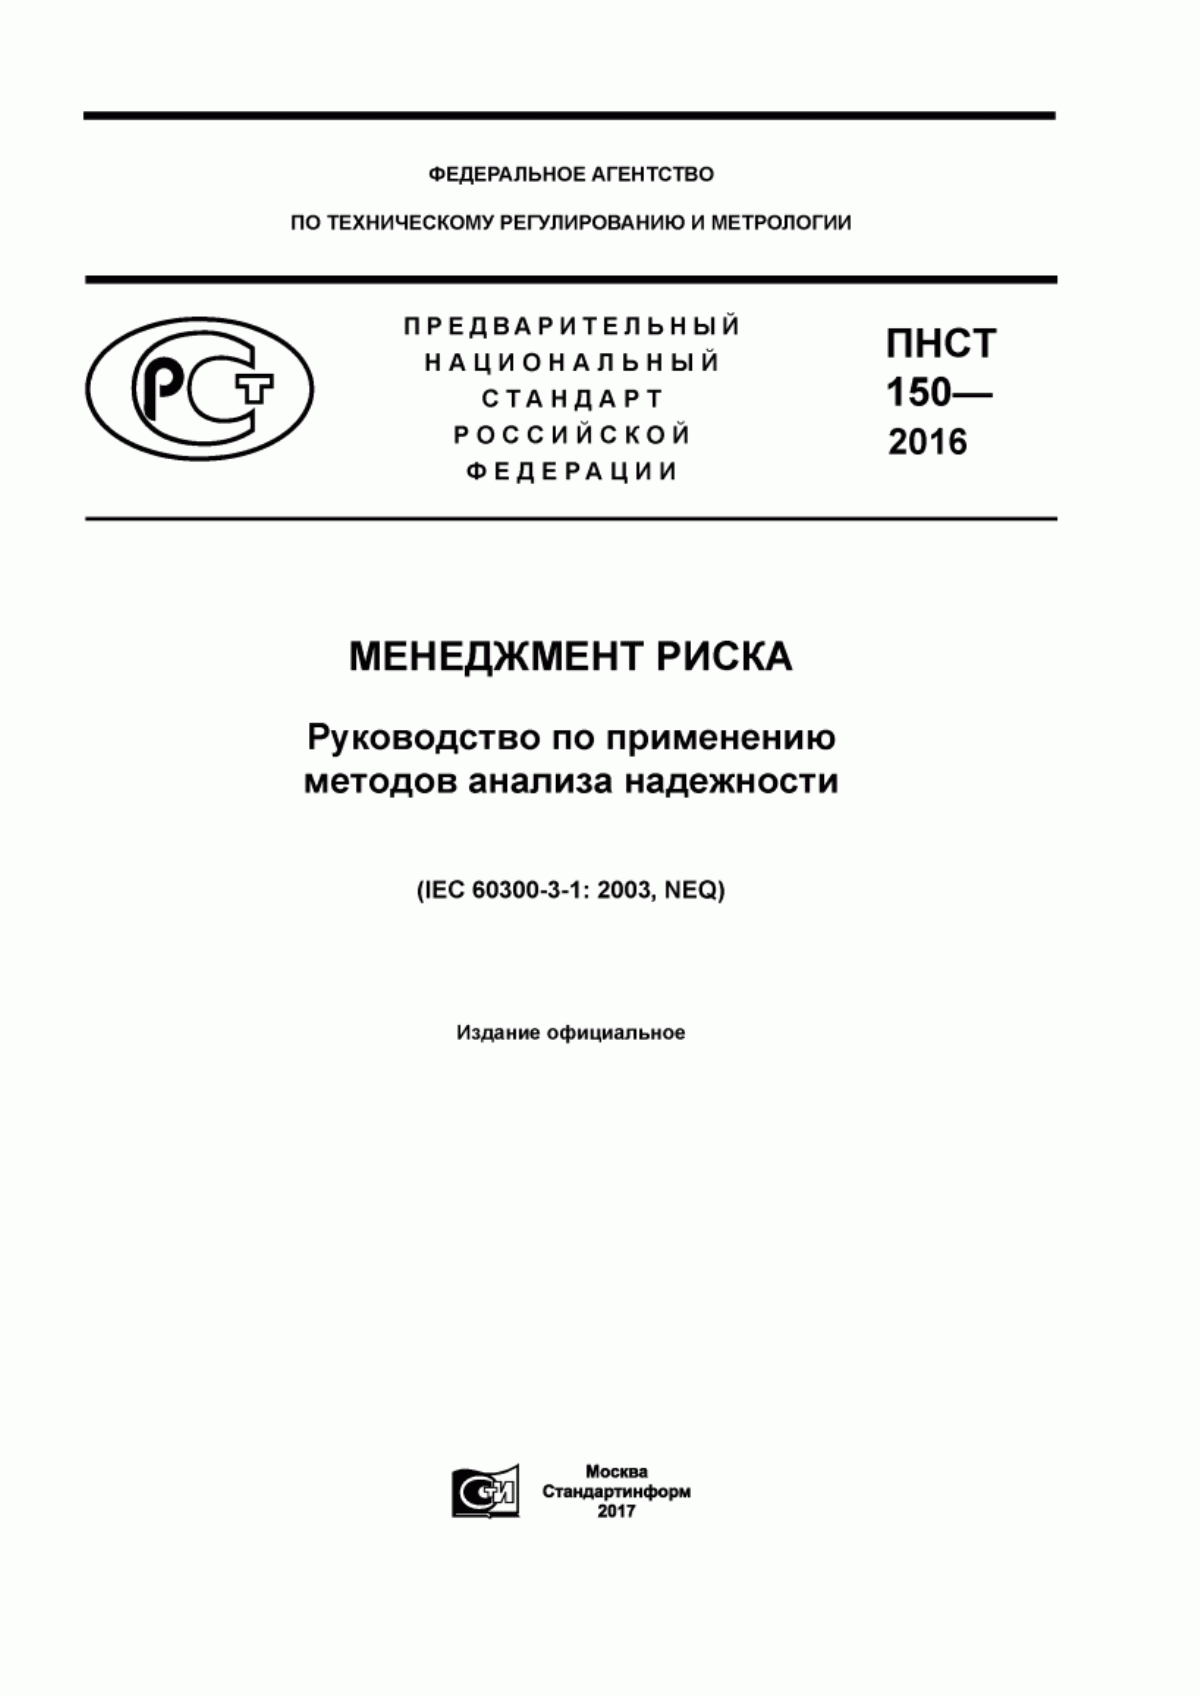 ПНСТ 150-2016 Менеджмент риска. Руководство по применению методов анализа надежности